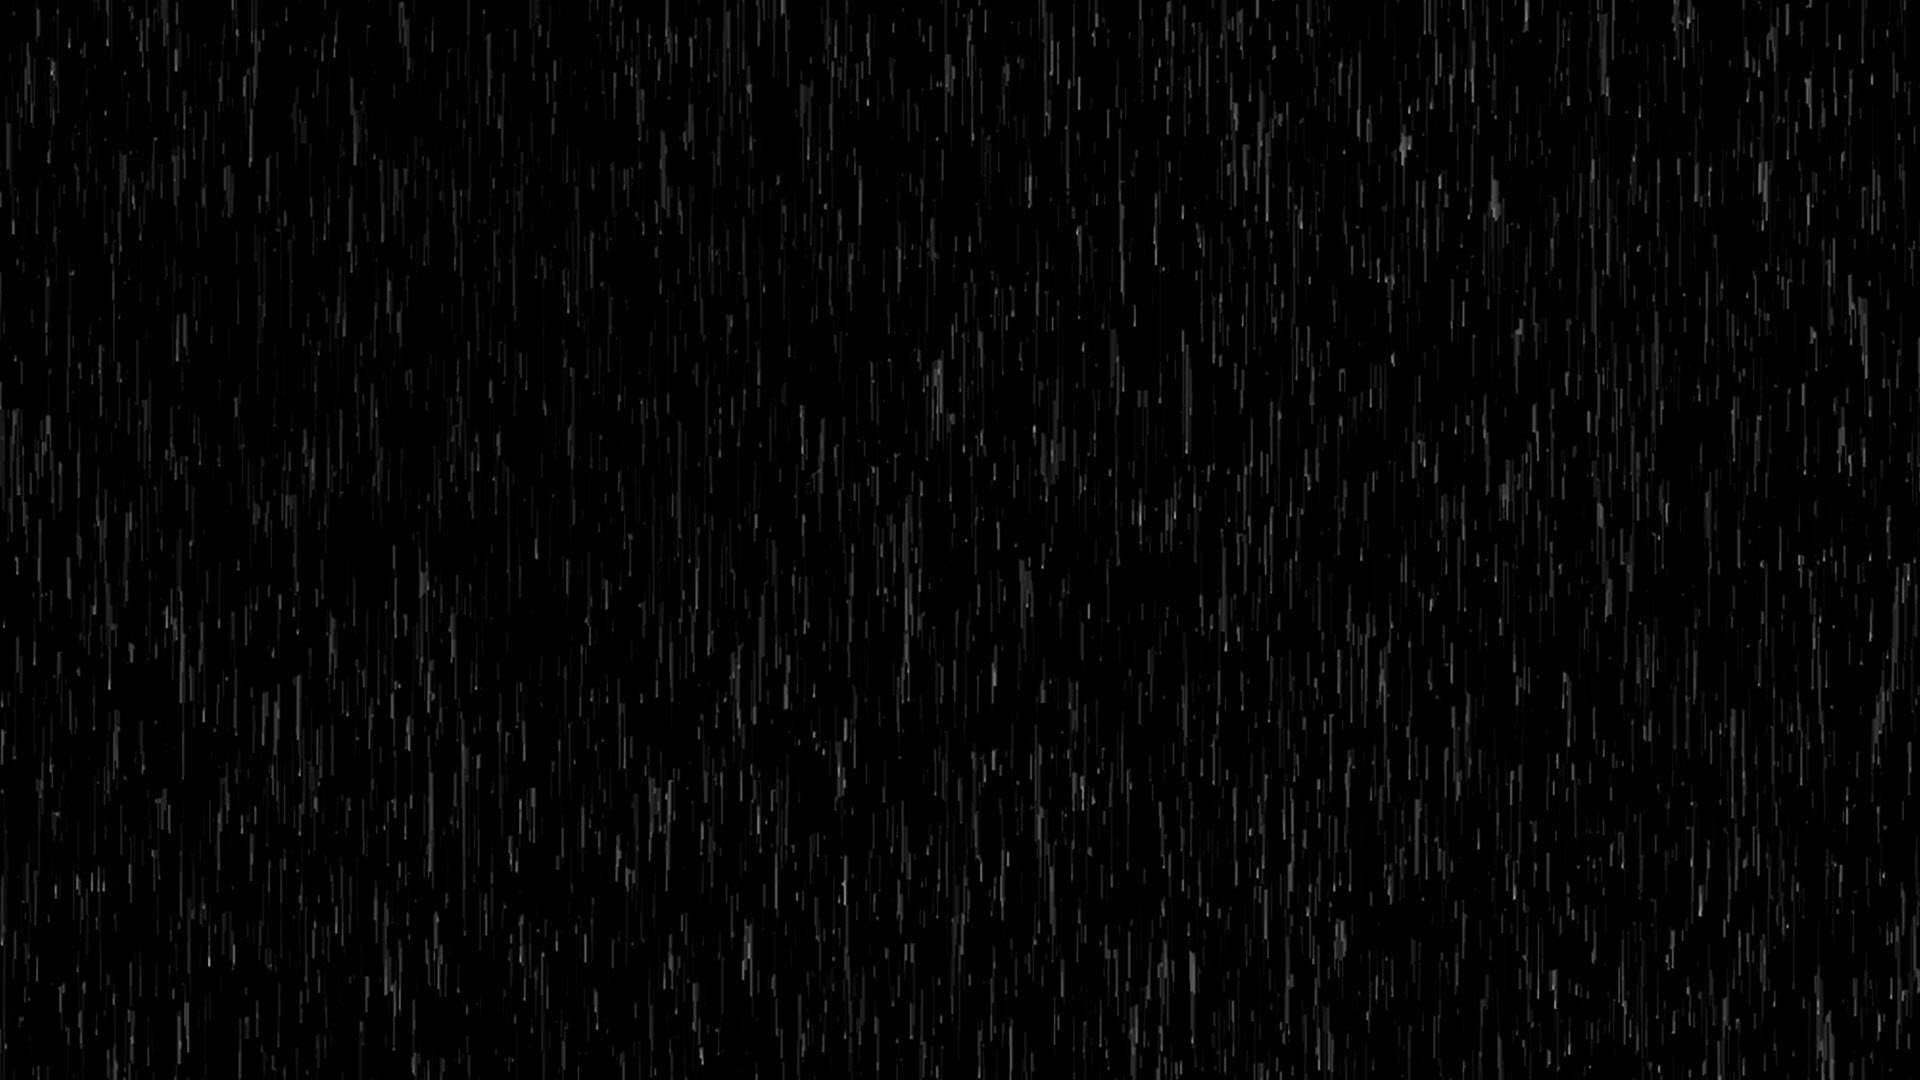 Rain effect. Текстура дождя. Эффект дождя без фона. Черный фон для ФШ. Ливень текстура.